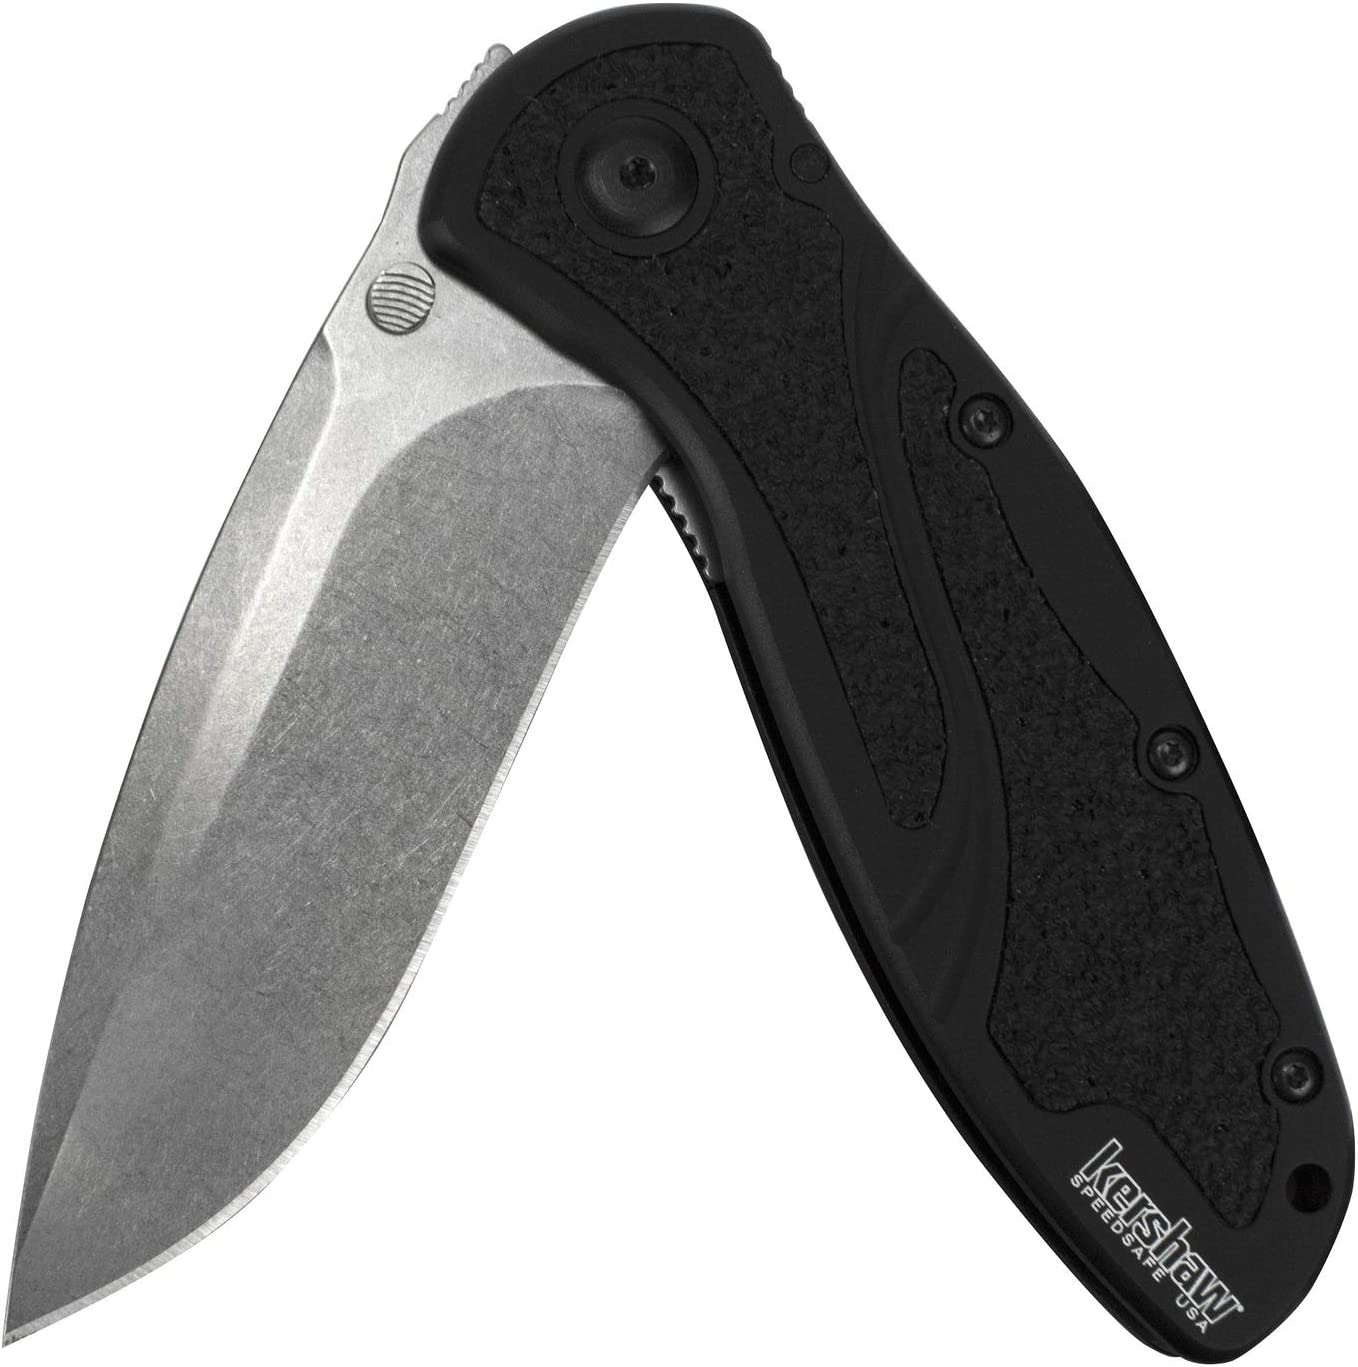 Kershaw Blur S30V Folding Pocket Knife (1670S30V); 3.4” S30V Blade with Stonewashed Finish and Anodized Aluminum Handle with Trac-Tec Inserts, SpeedSafe Assisted Opening, Reversible Pocketclip; 4 OZ., Small